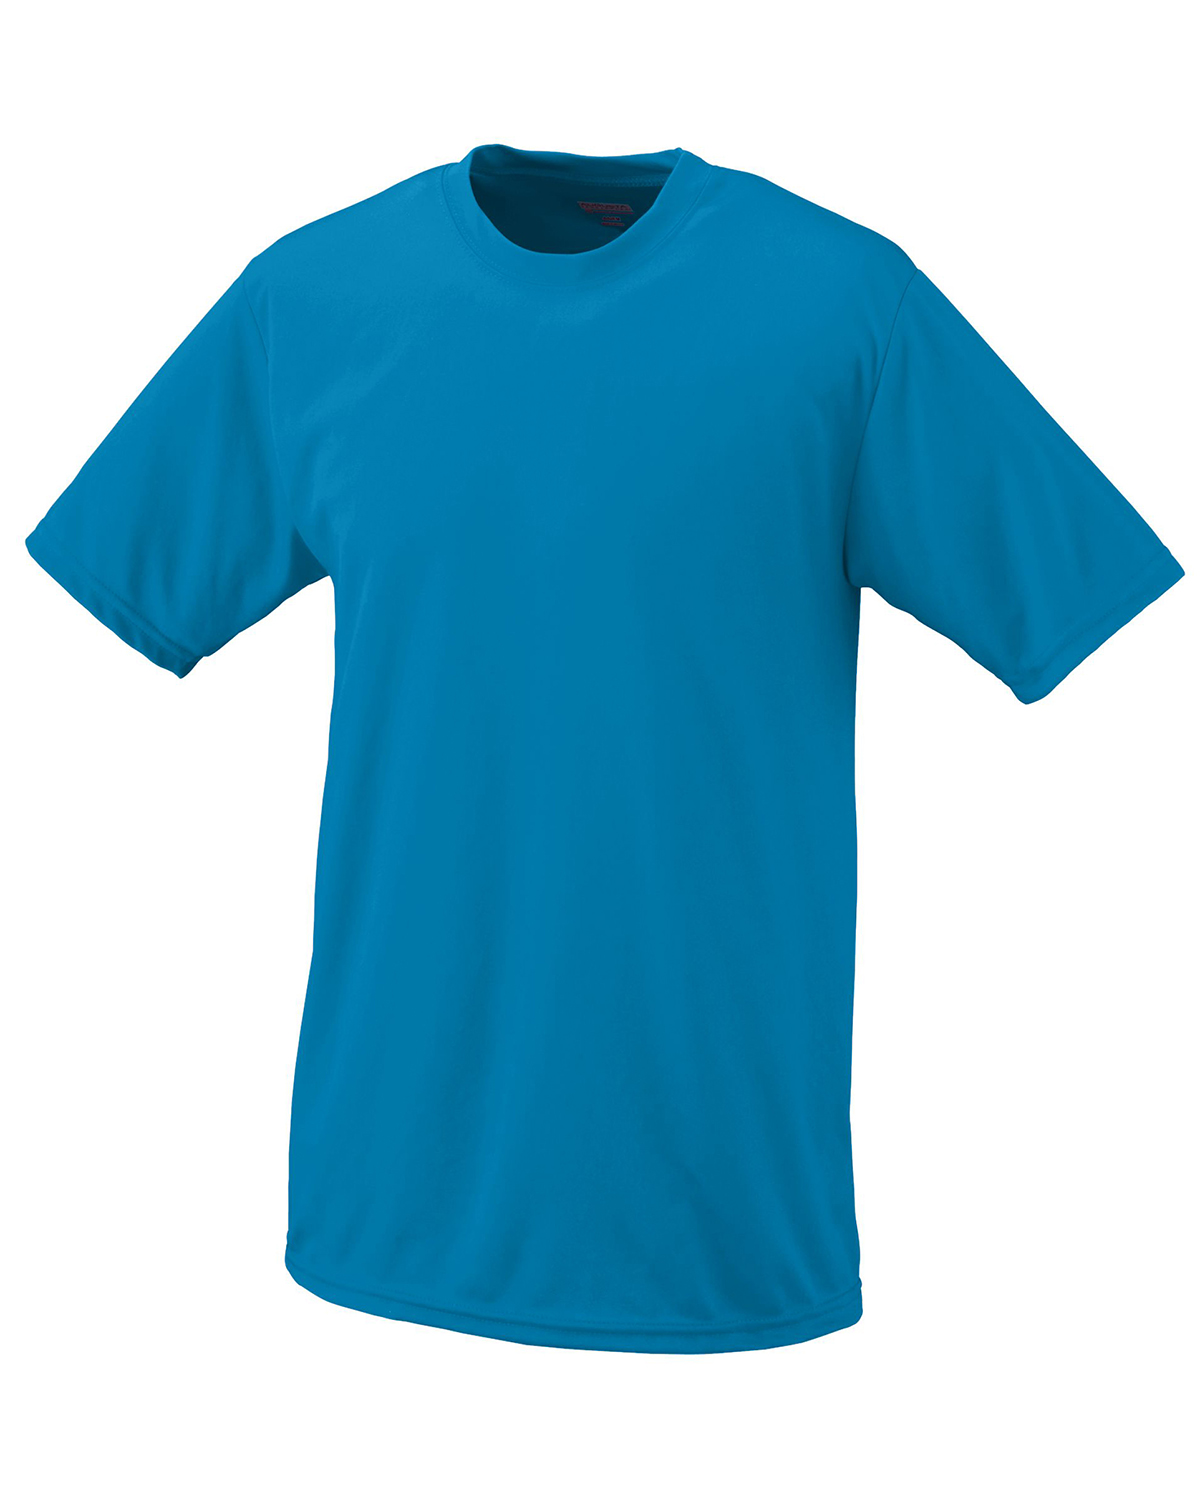 Augusta Sportswear Men's Navy Wicking T-Shirt